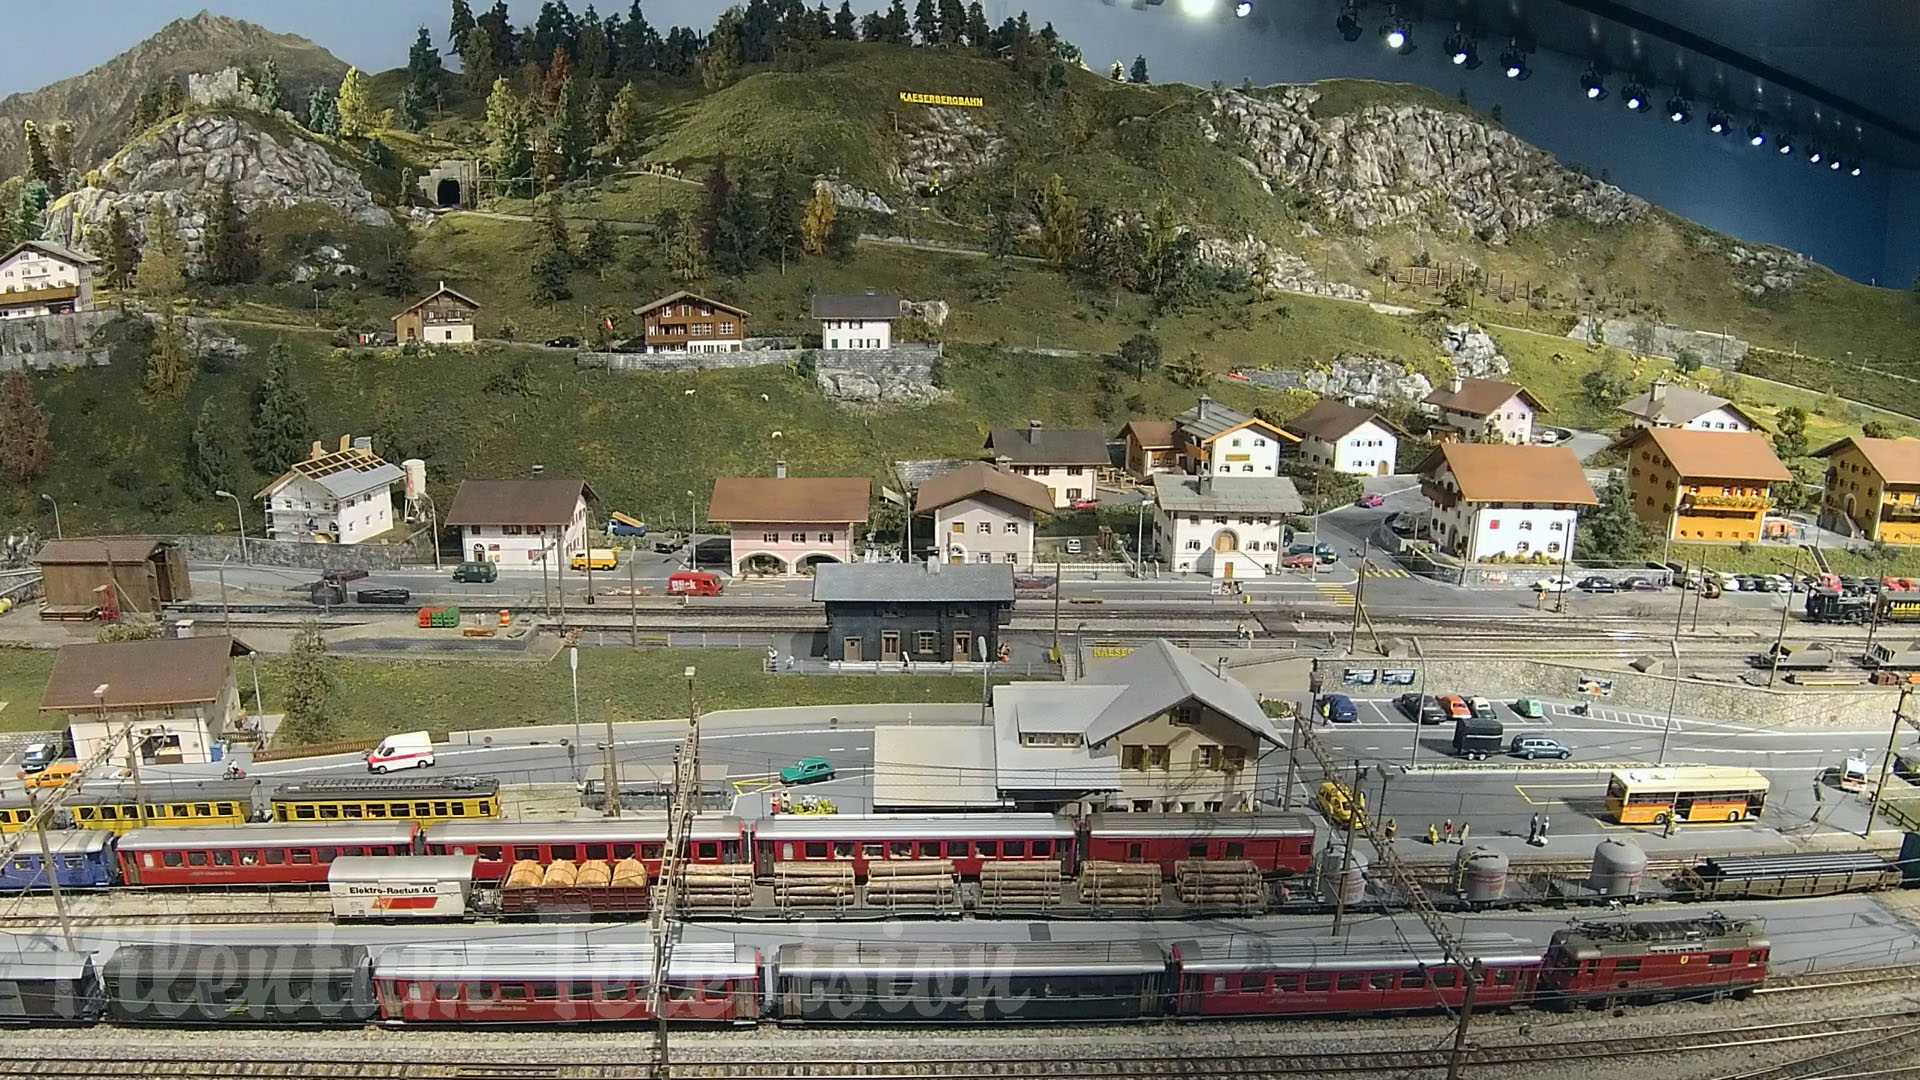 The Great Model Railroad Museum in Switzerland - Chemins de fer du Kaeserberg